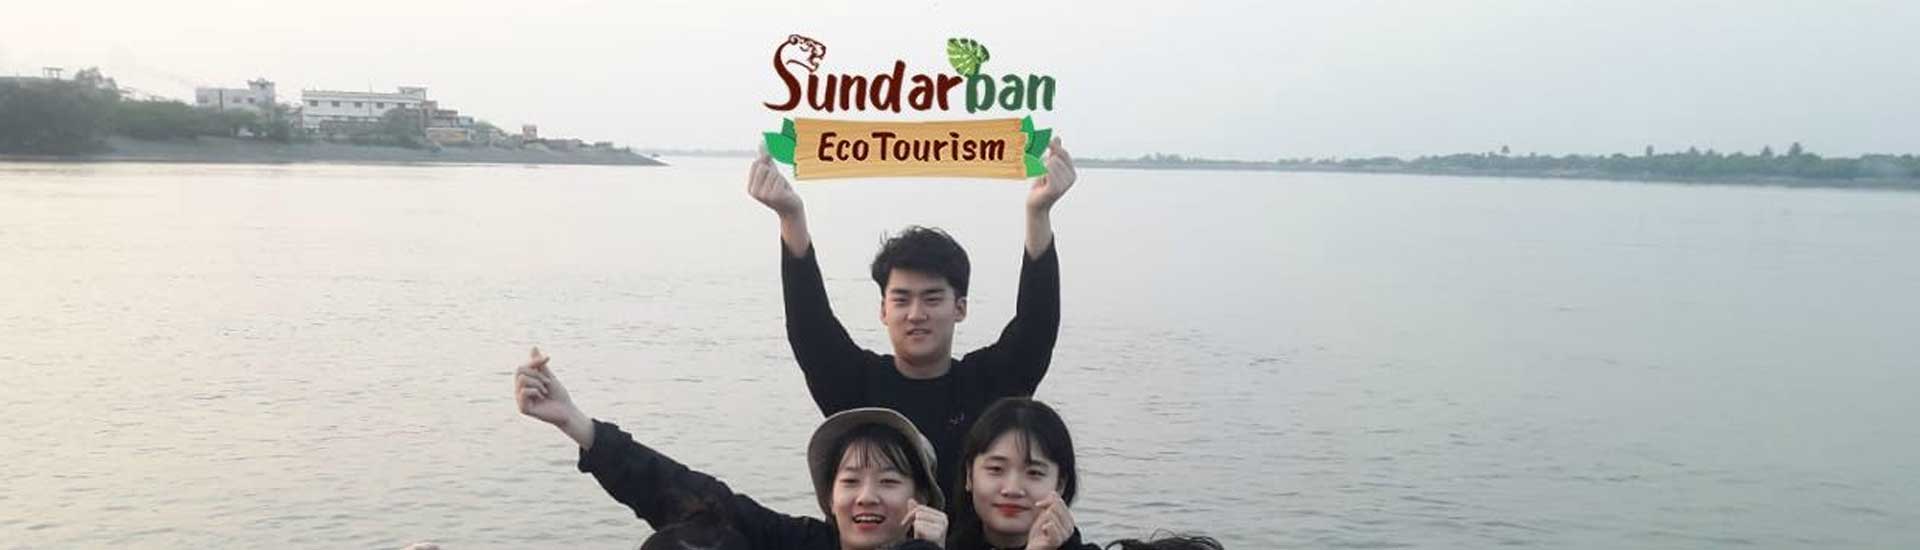 This Summer Destination- Sundarban